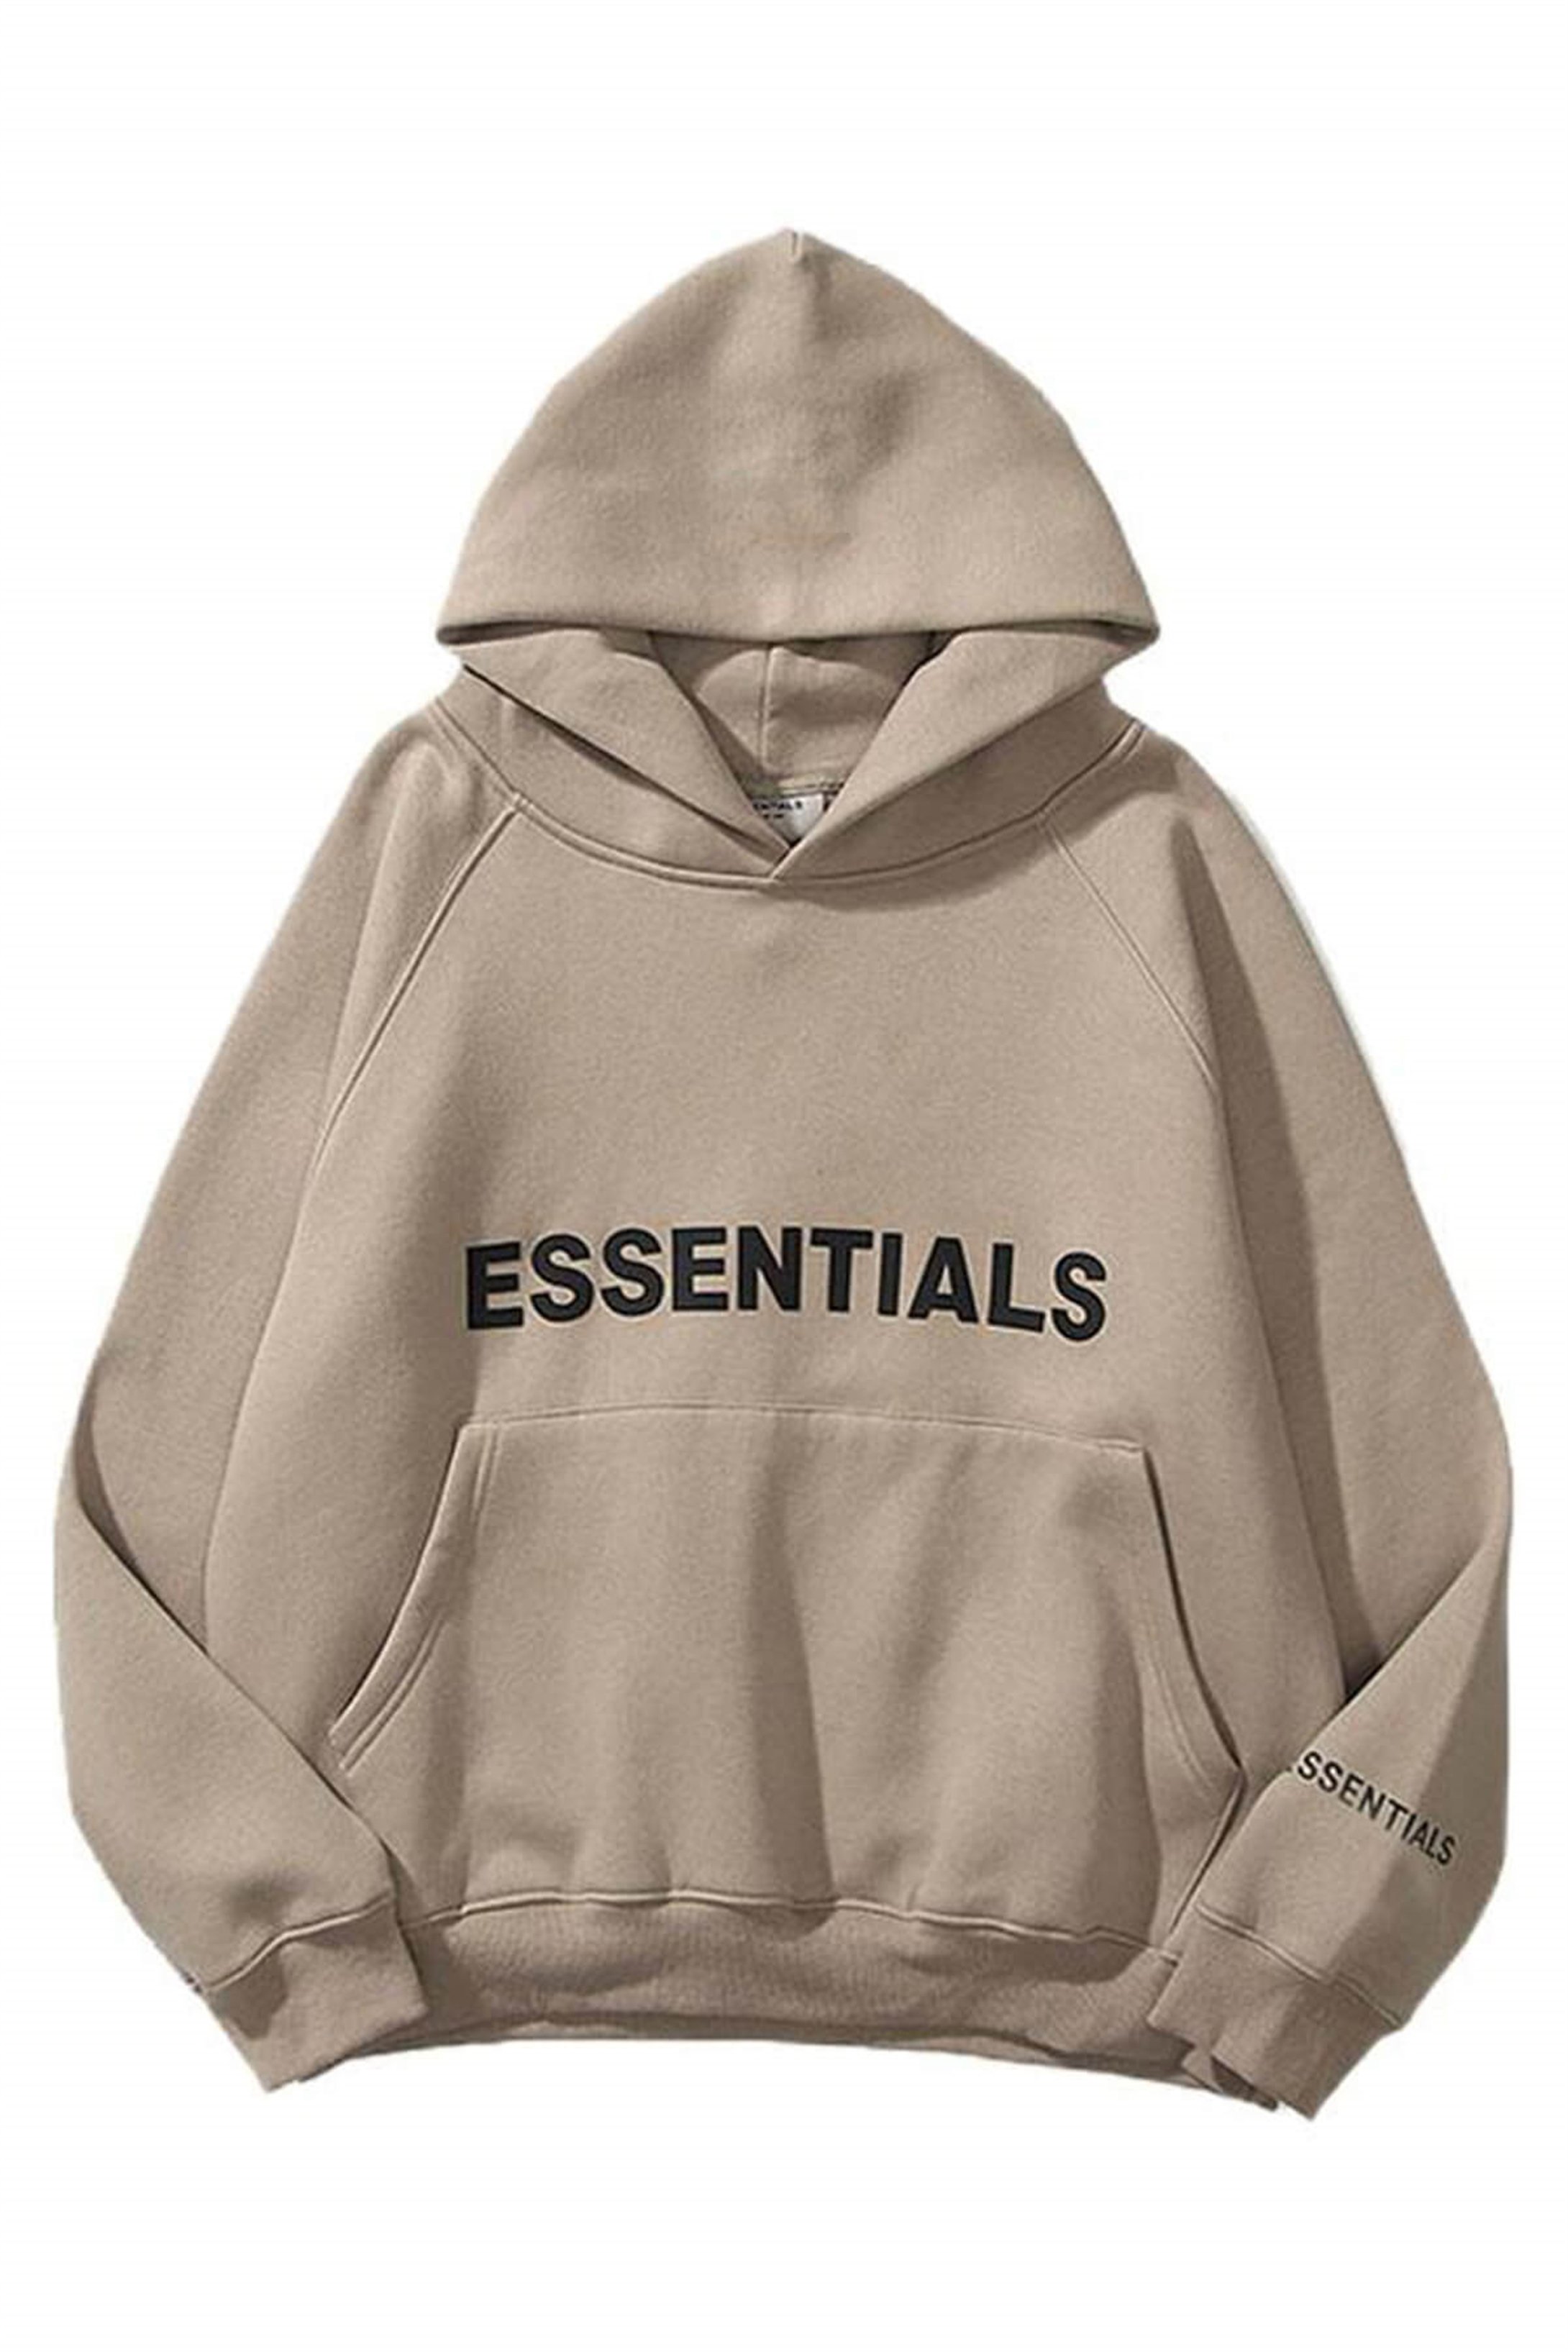 Trendiz Unisex Taş Essentials Sweatshirt Hoodie - Trendiz